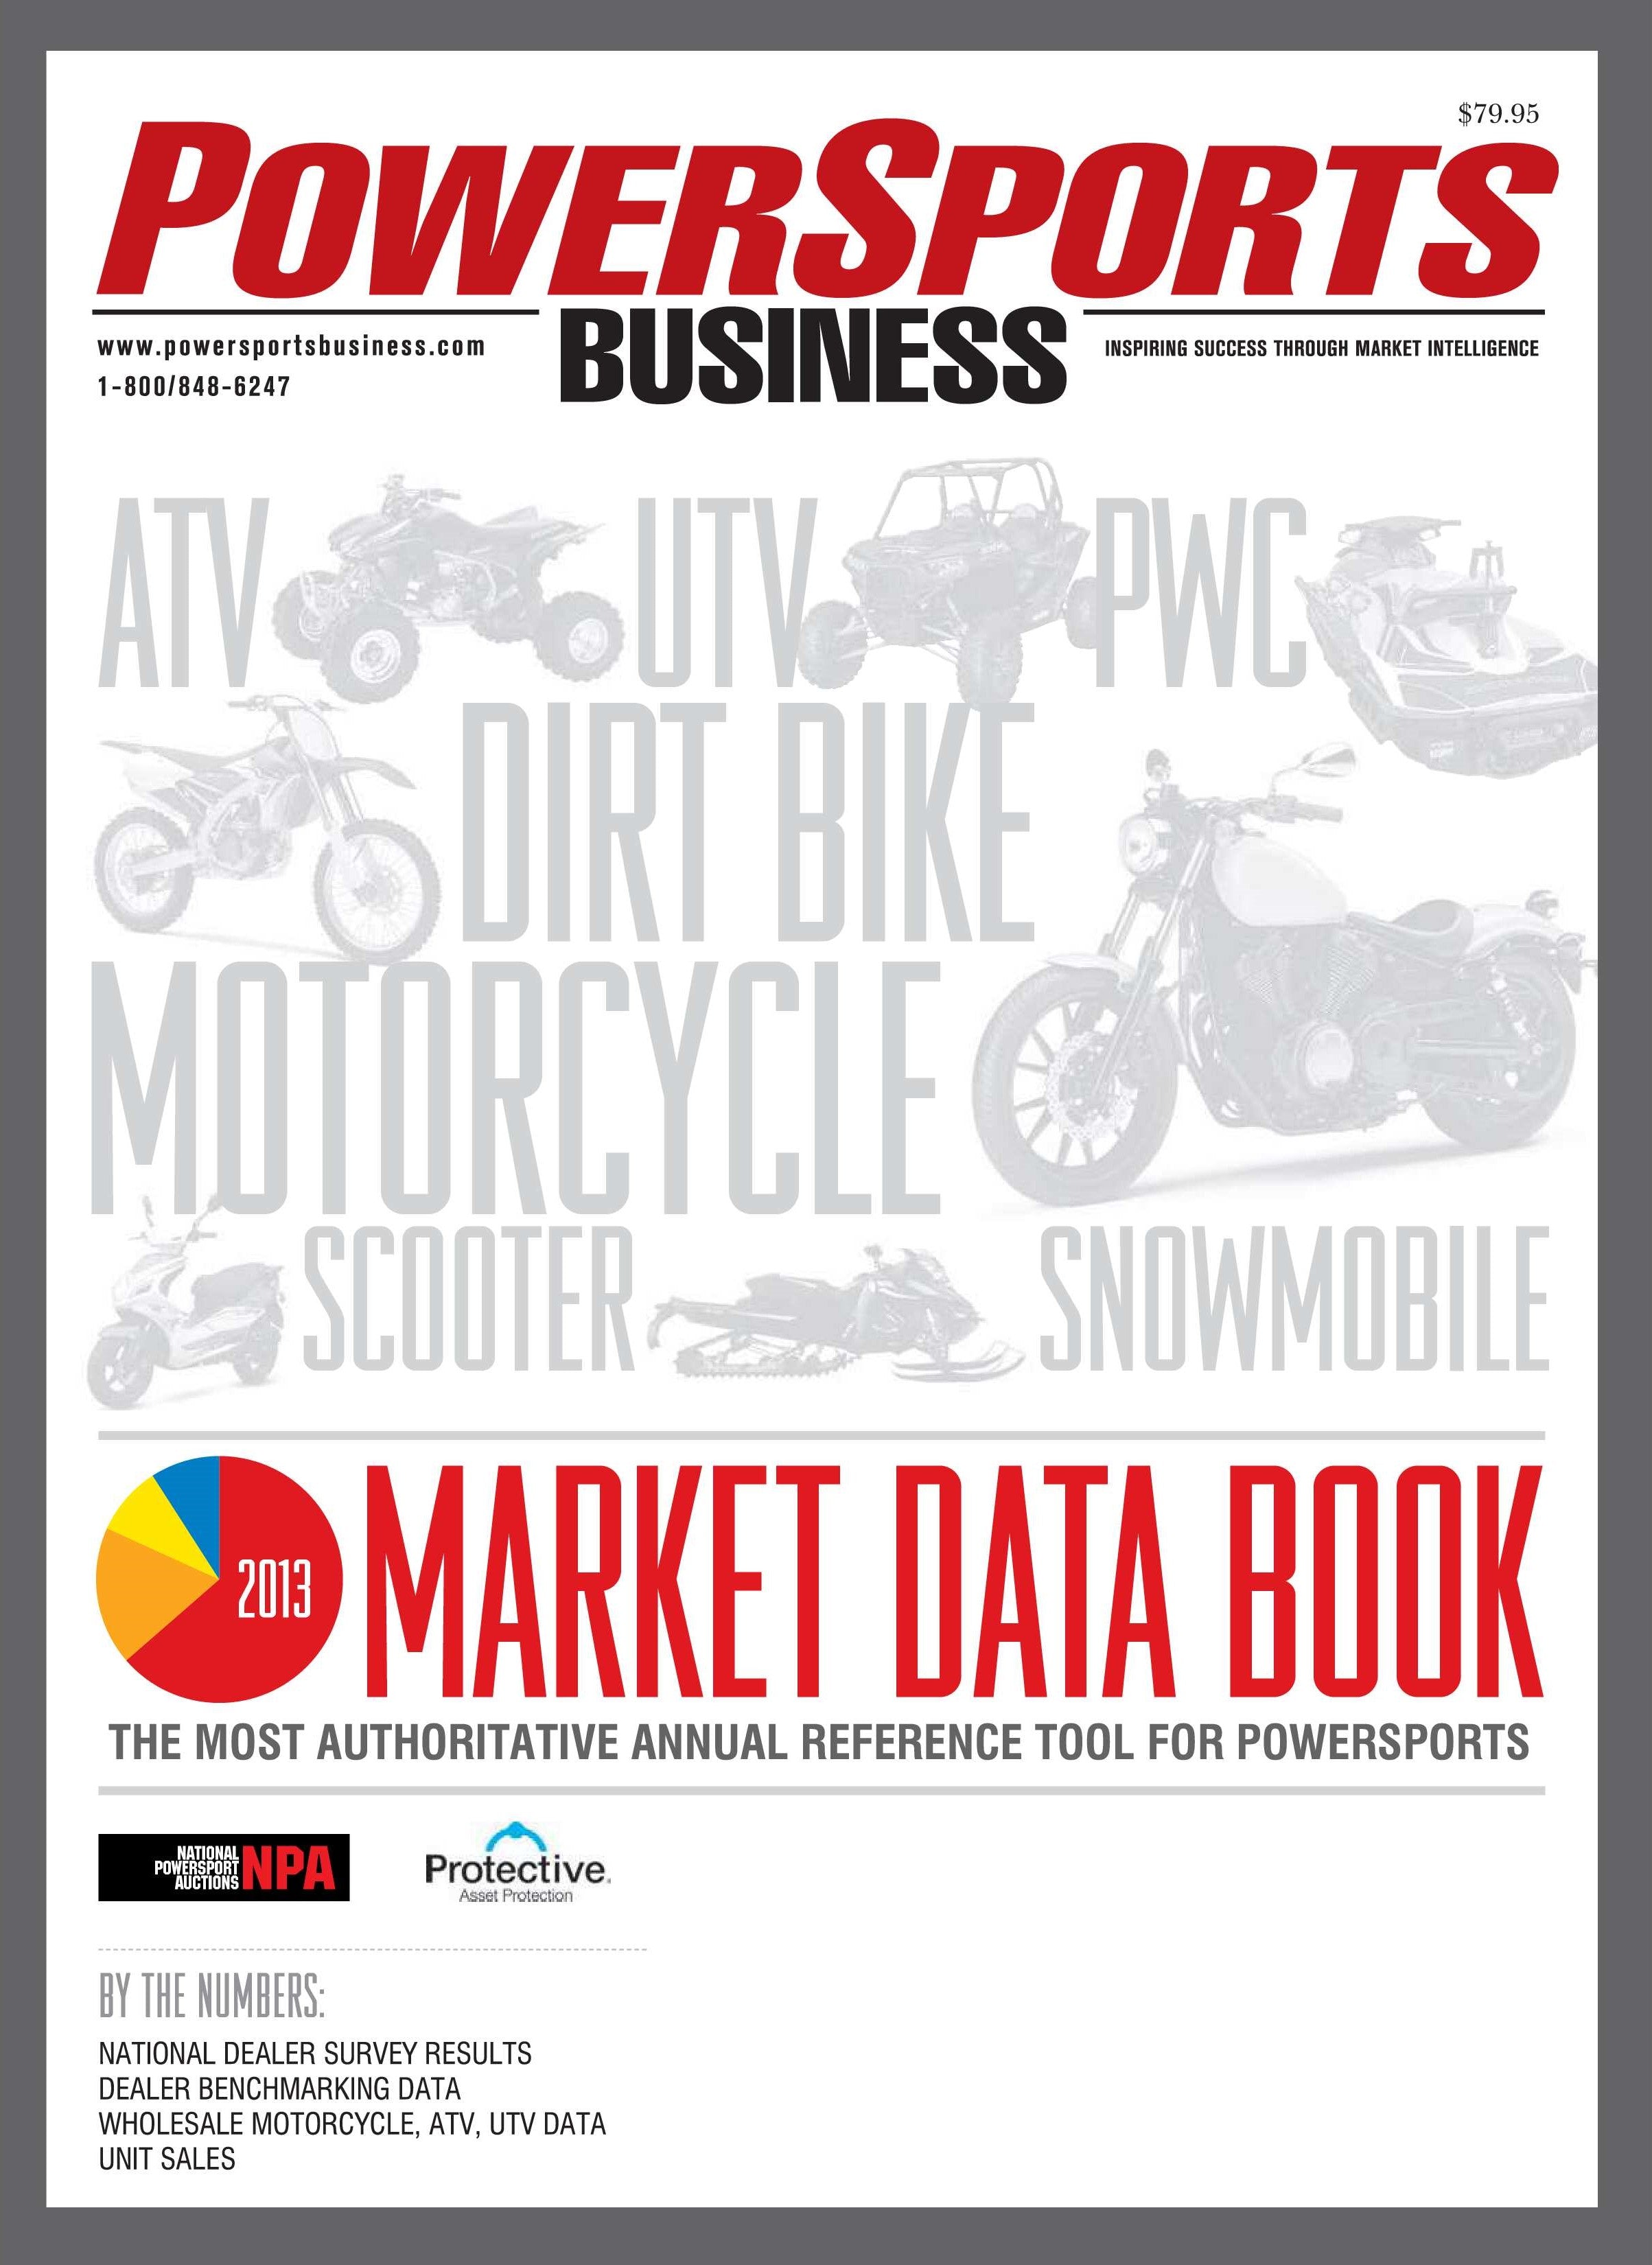 Powersports Business 2013 Market Data Book